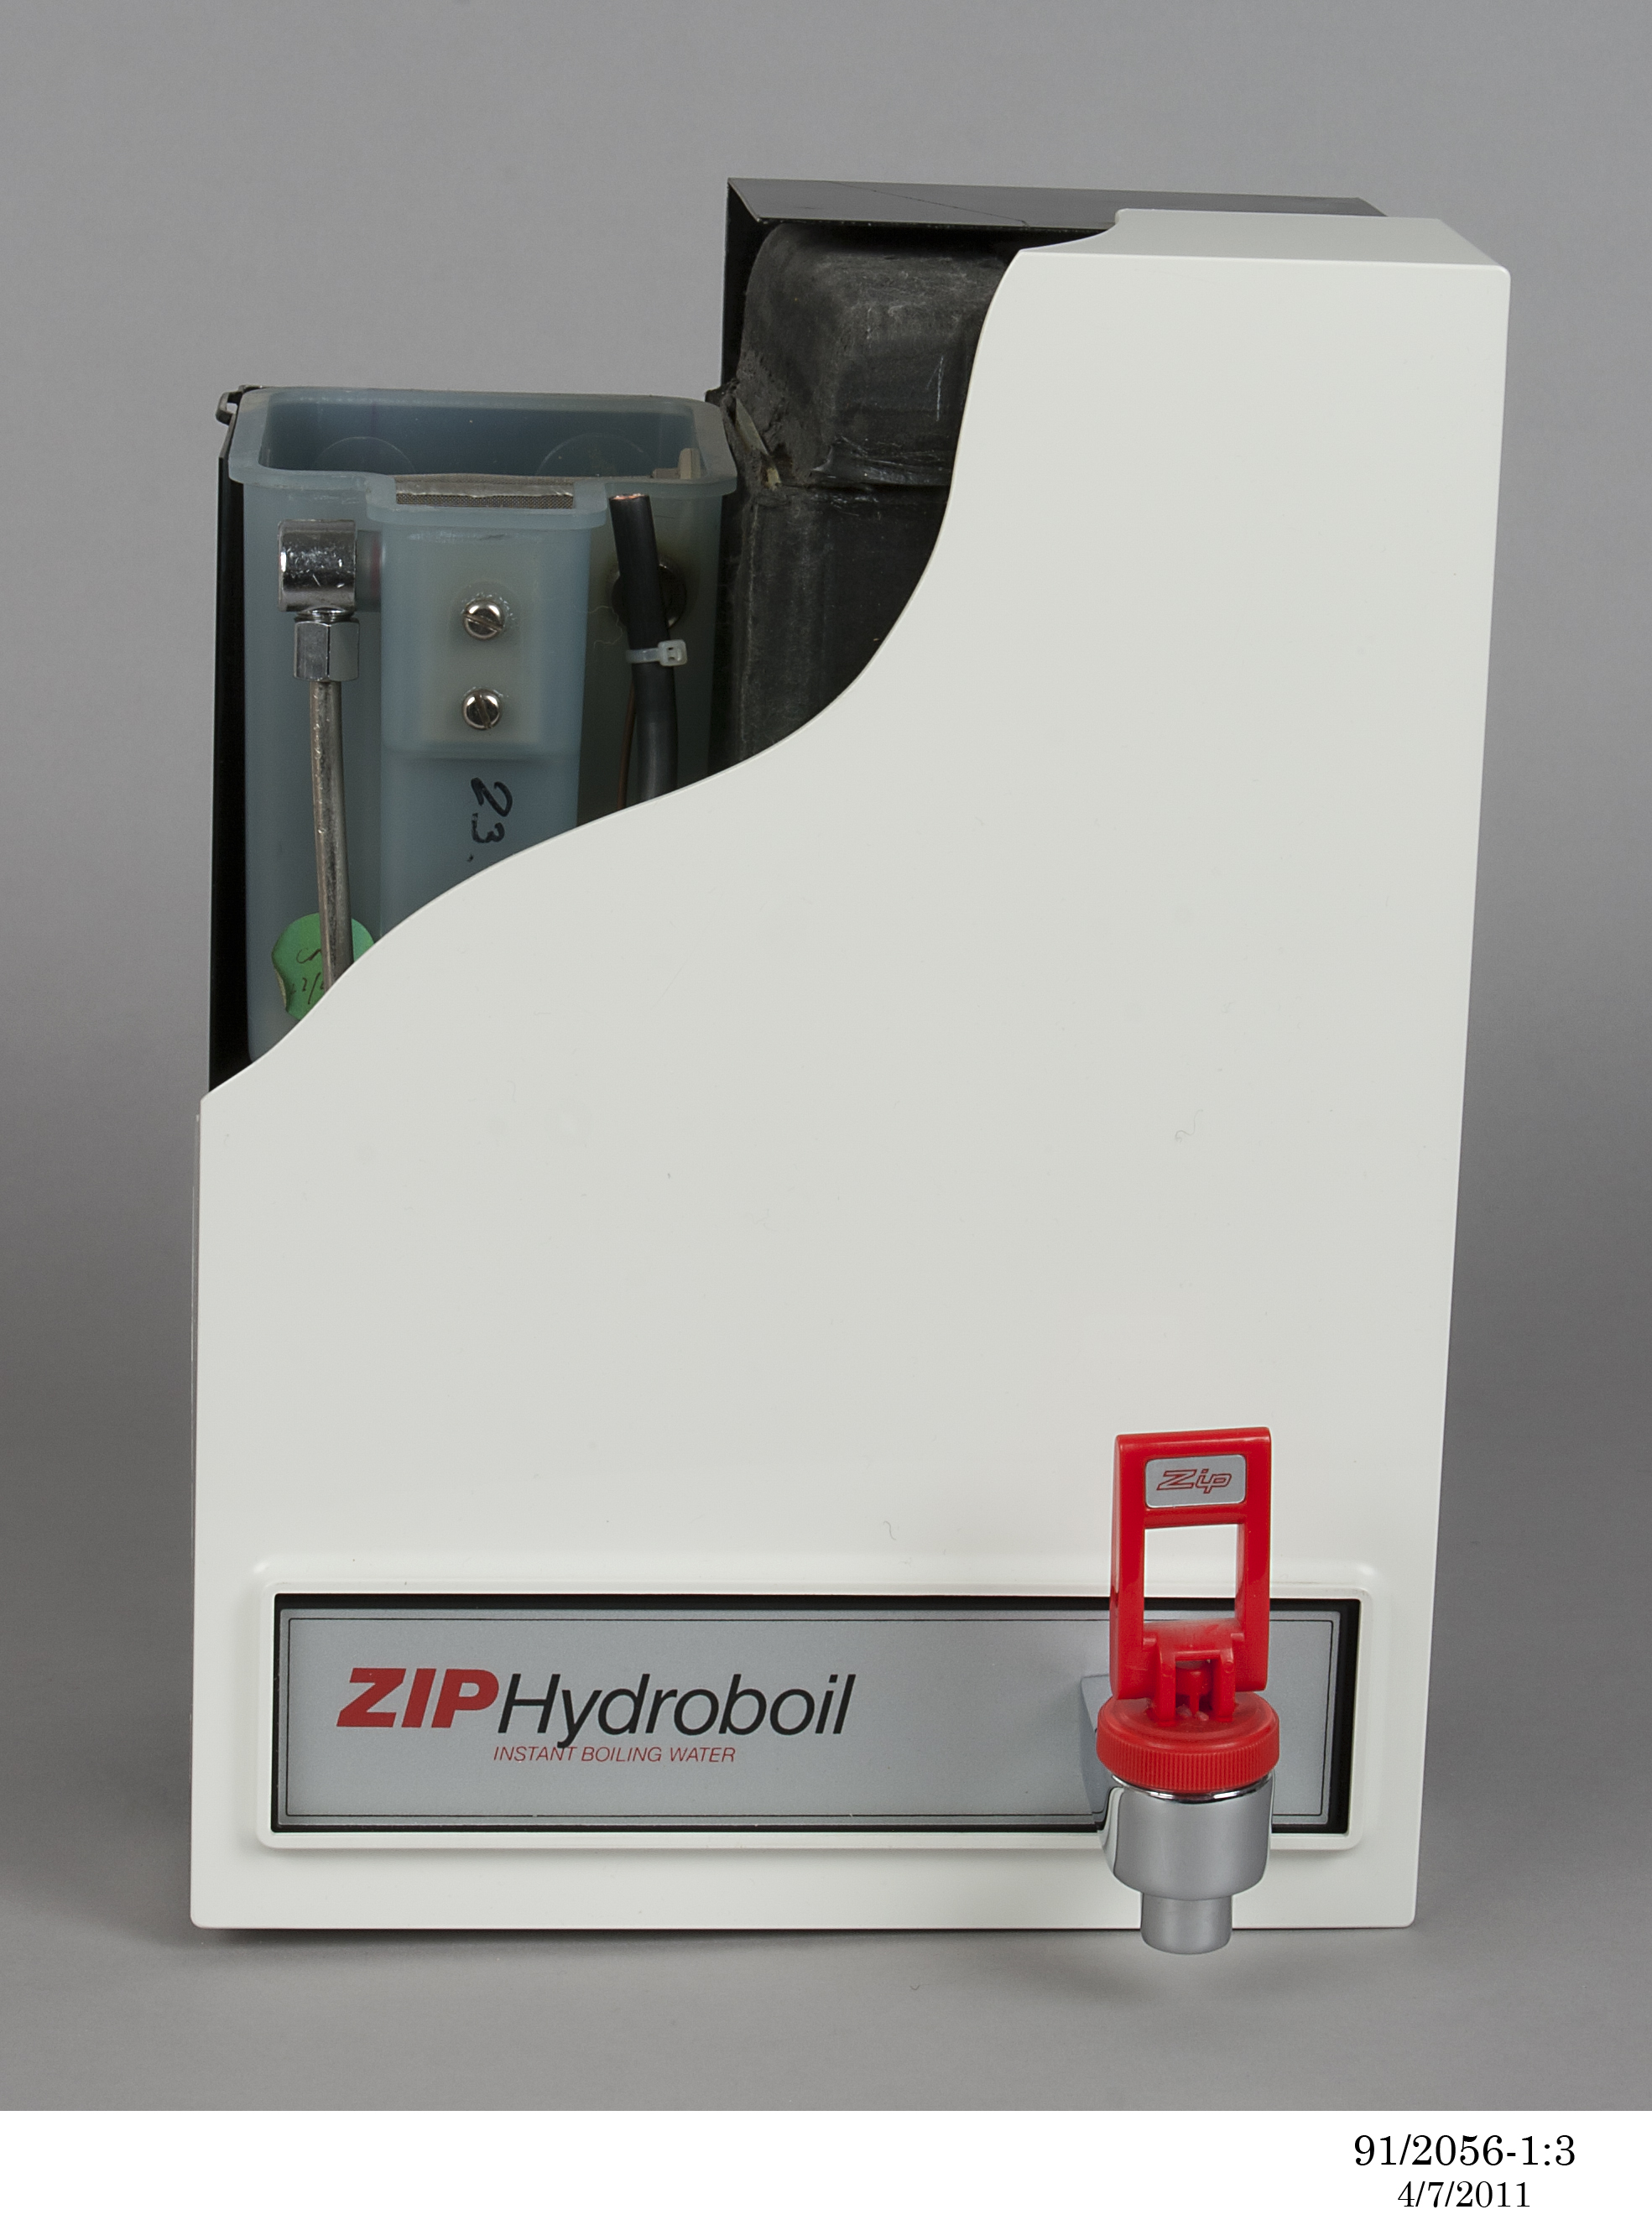 Zip Hydroboil instant electric water heater